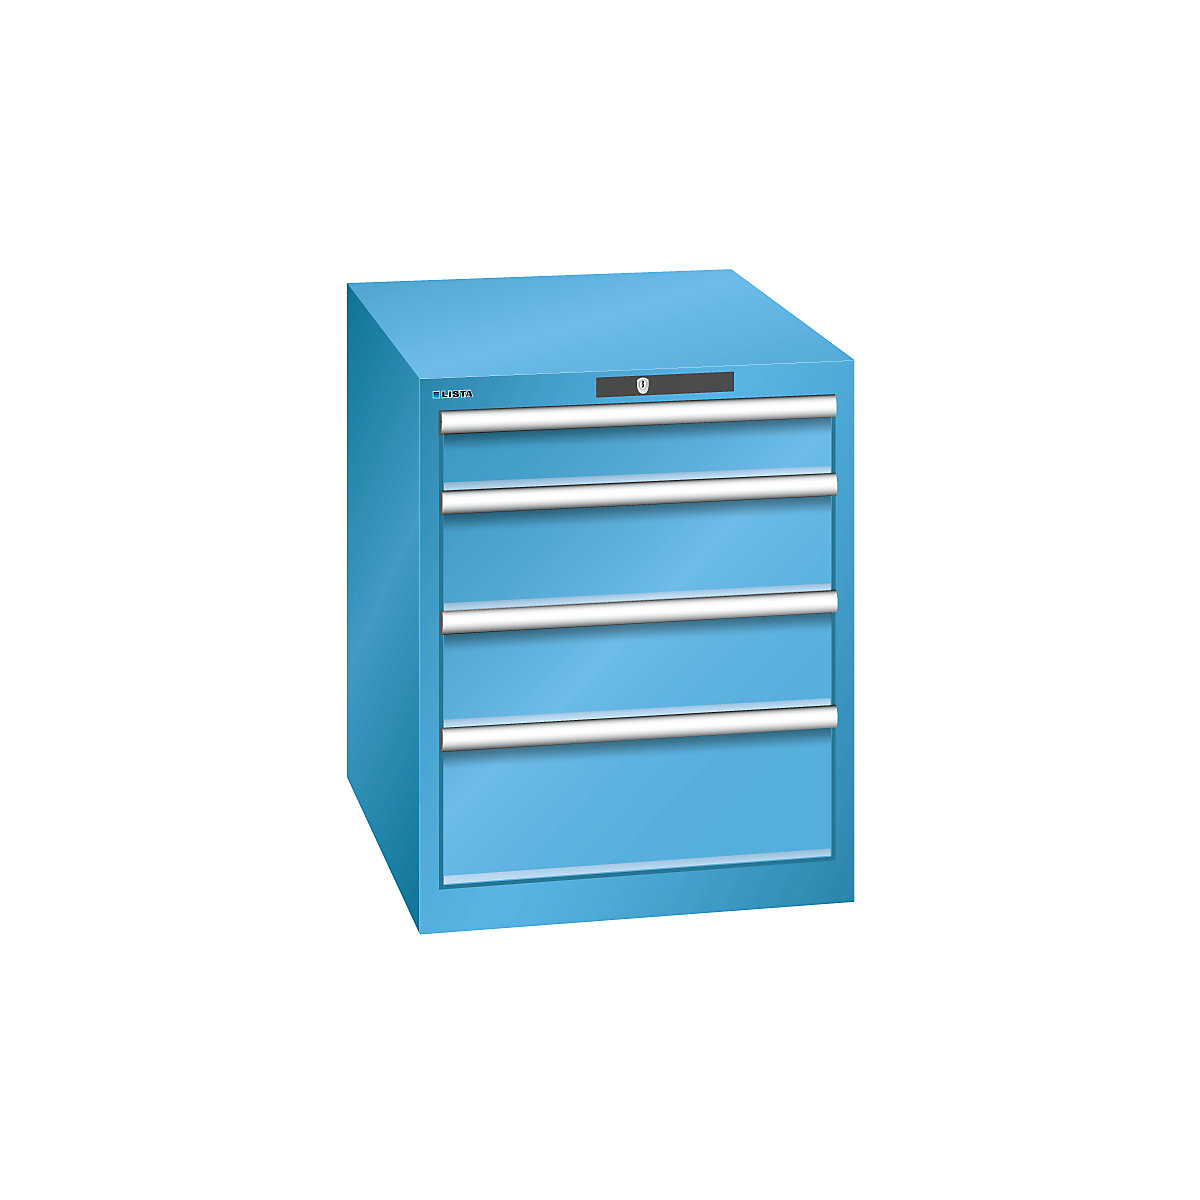 Drawer cupboard, 4 drawers – LISTA, WxDxH 564 x 724 x 700 mm, light blue-8